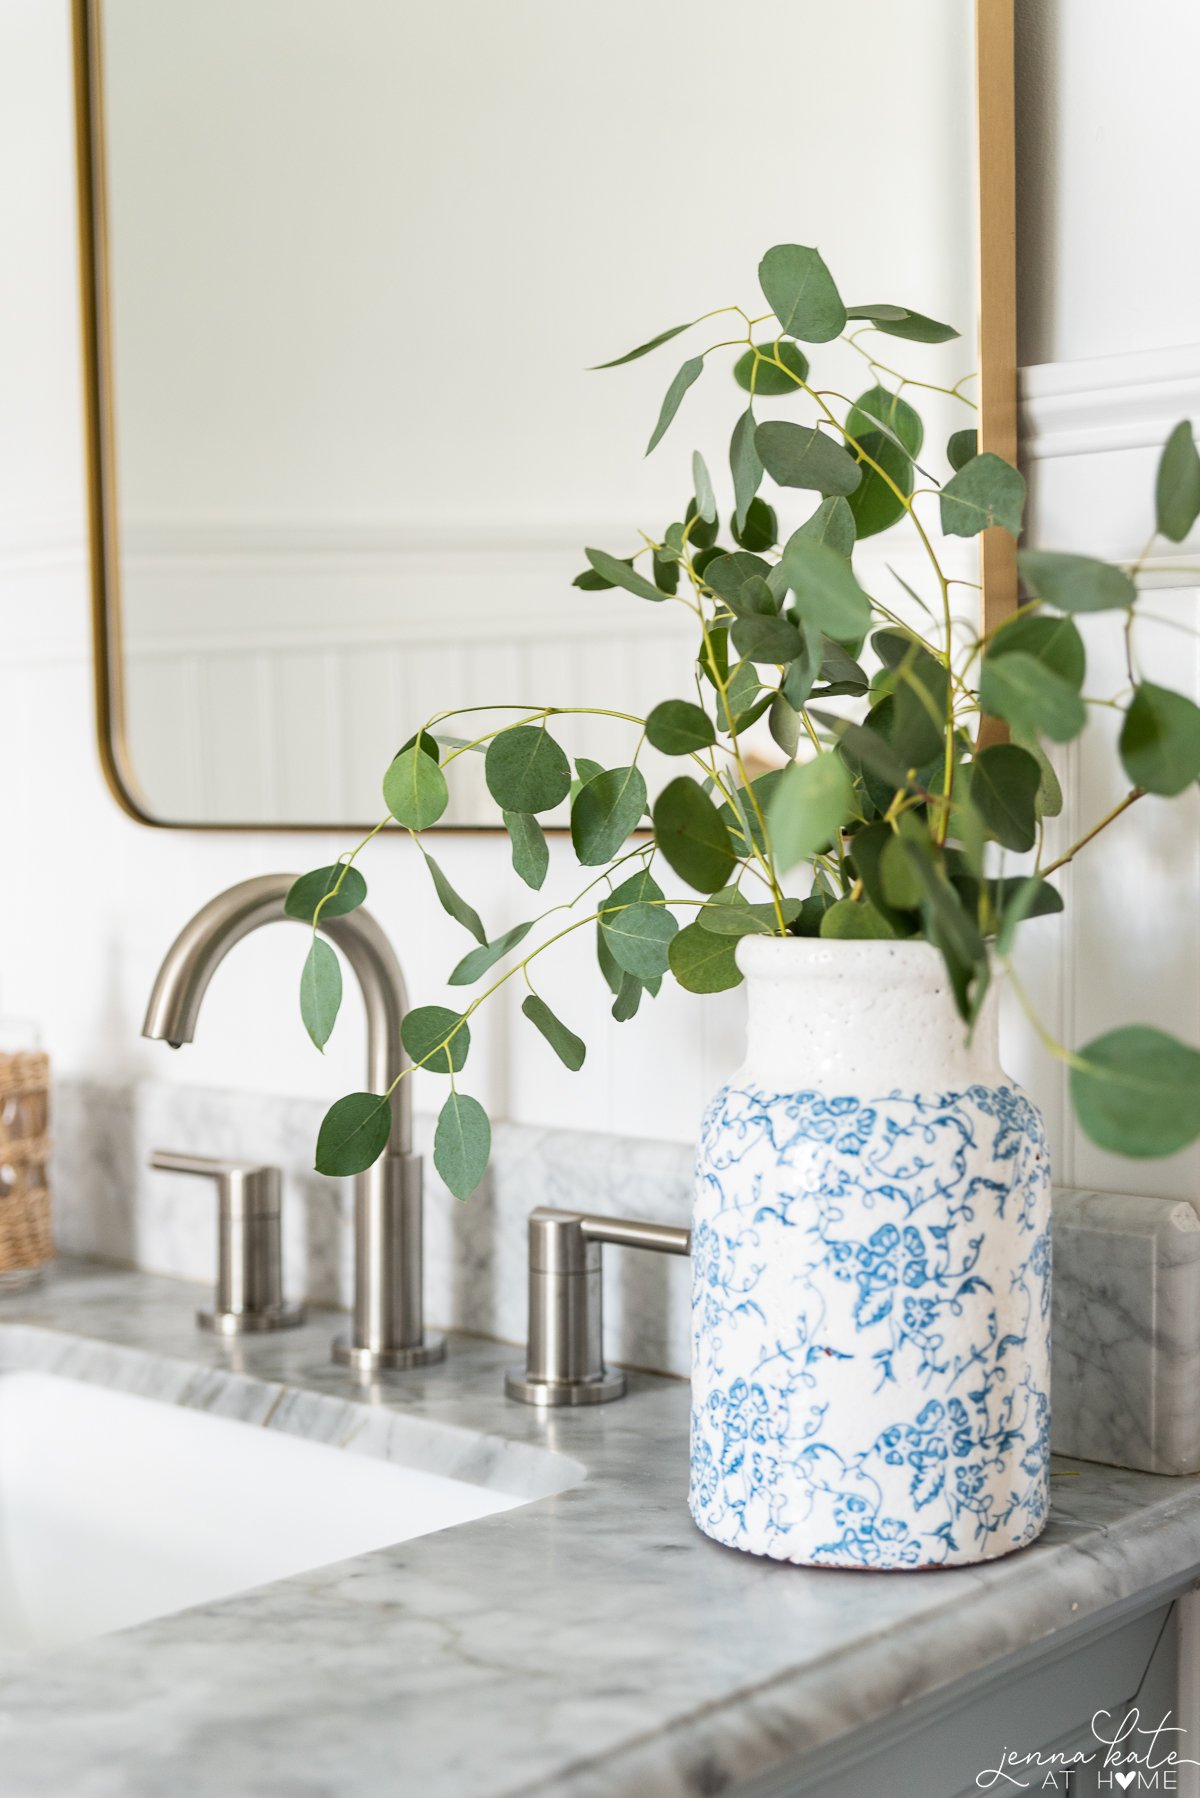 vase of eucalyptus stems on the bathroom vanity